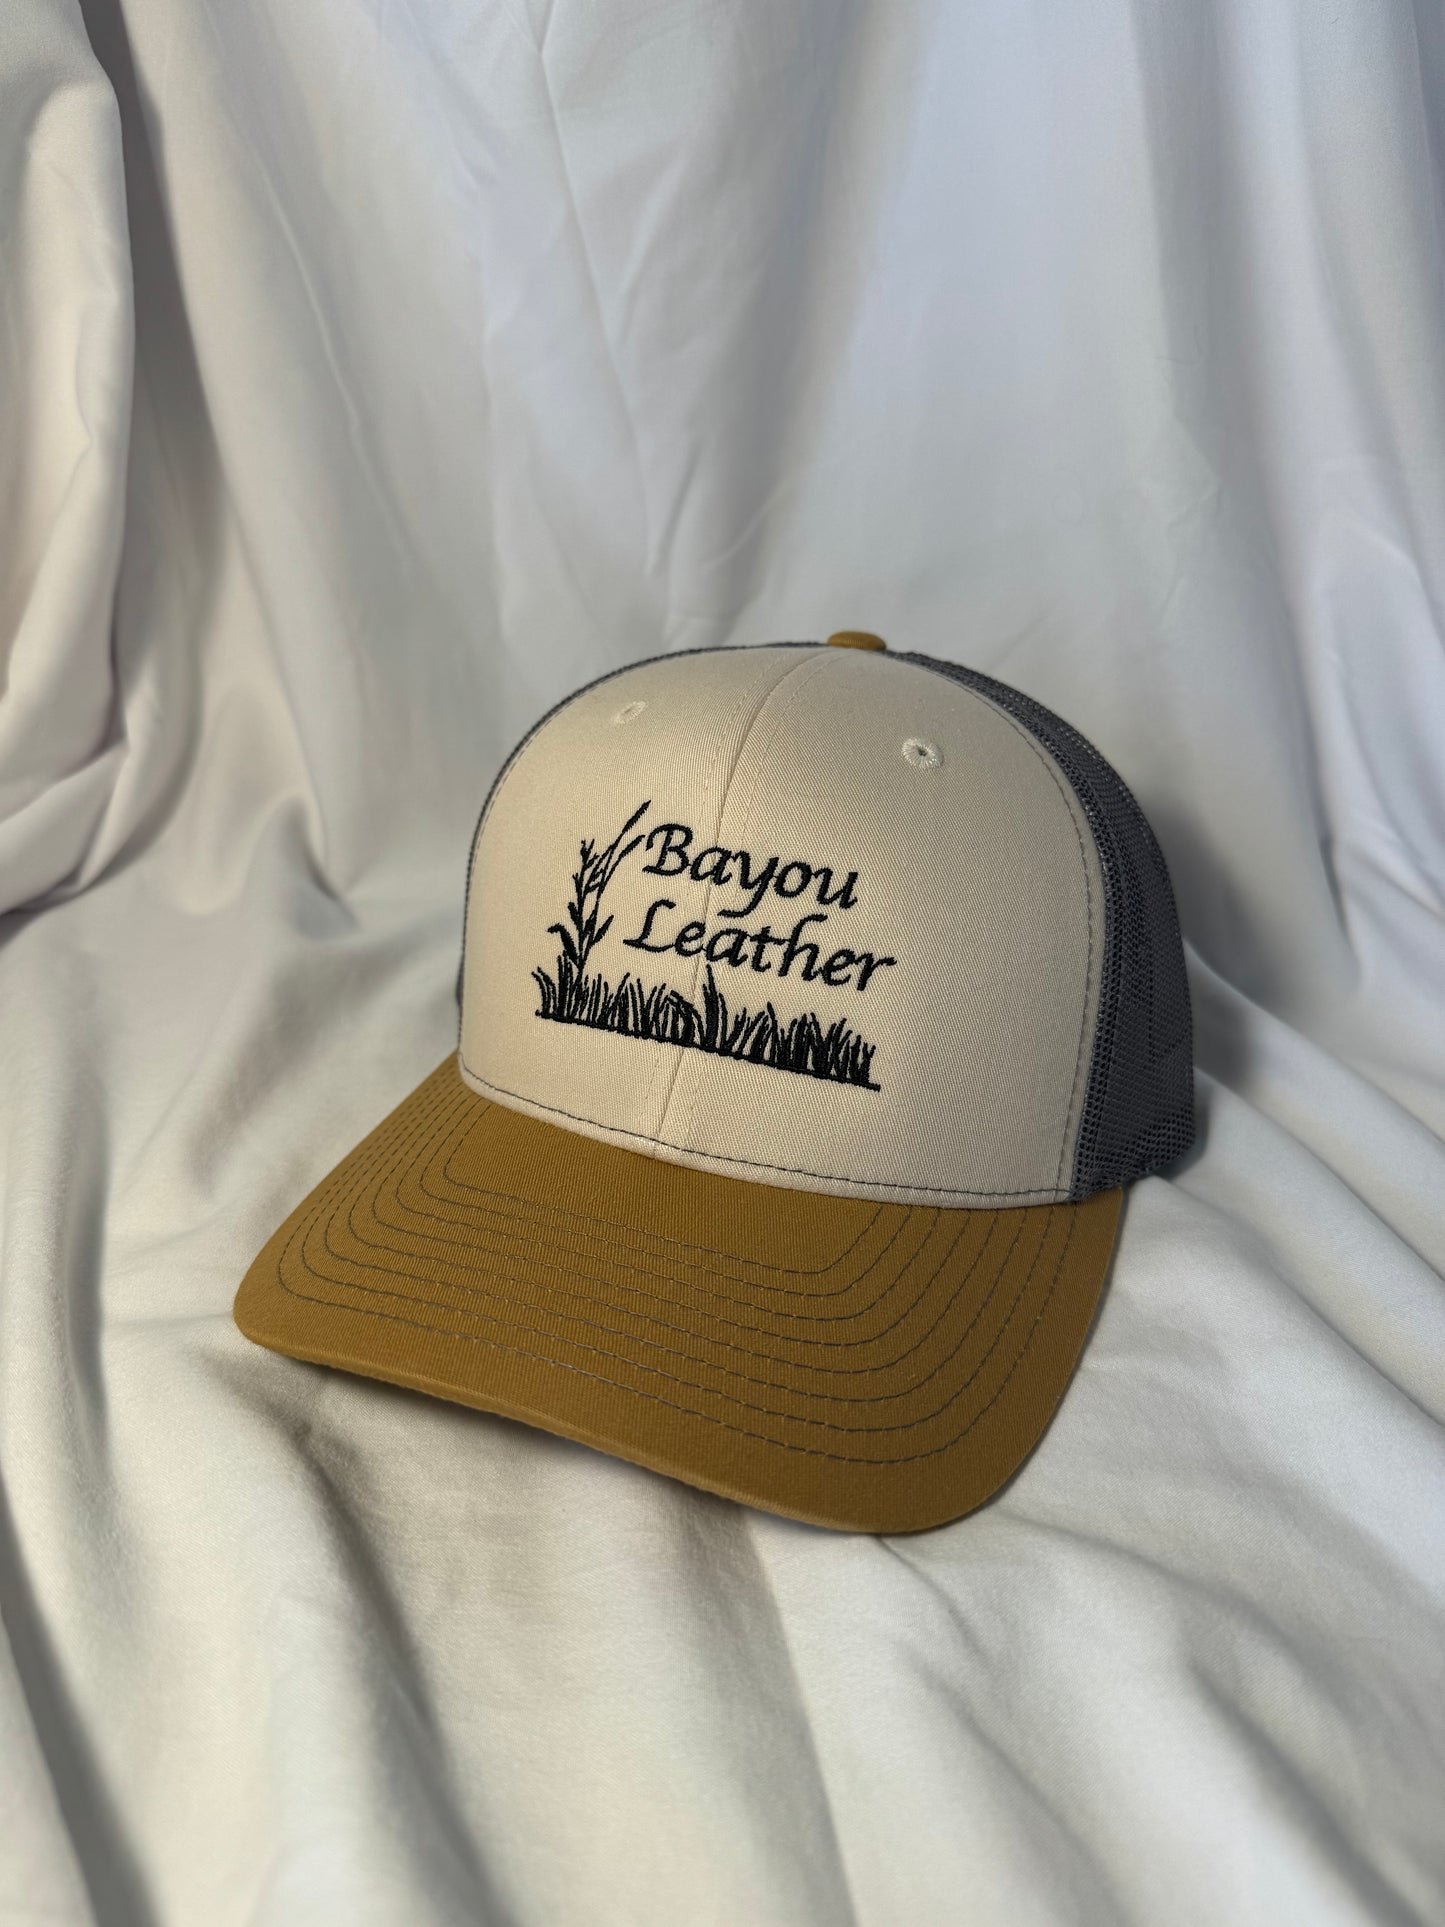 Bayou Leather Trucker Hat